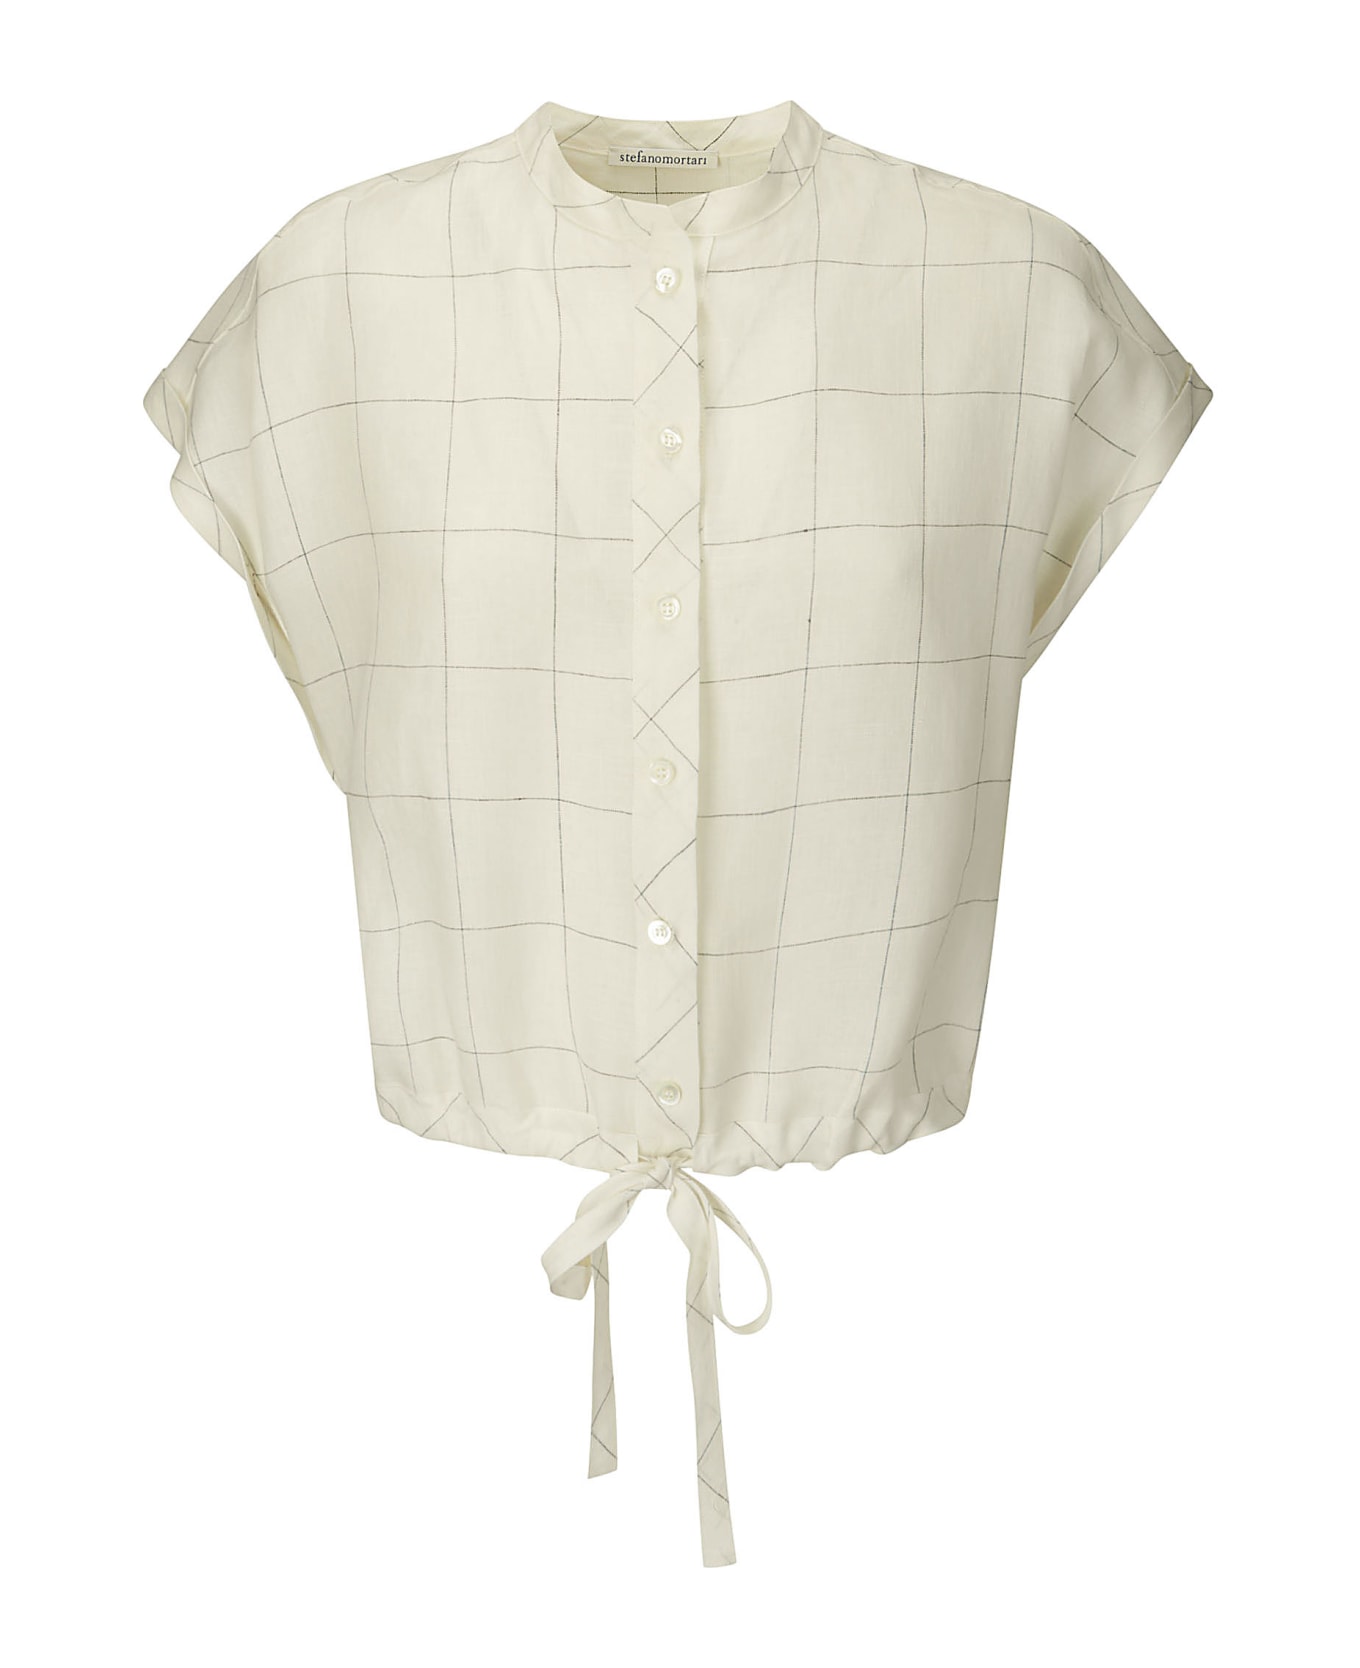 Stefano Mortari M/s Windowed Linen Shirt - CREAM WITH BLACK LINES シャツ